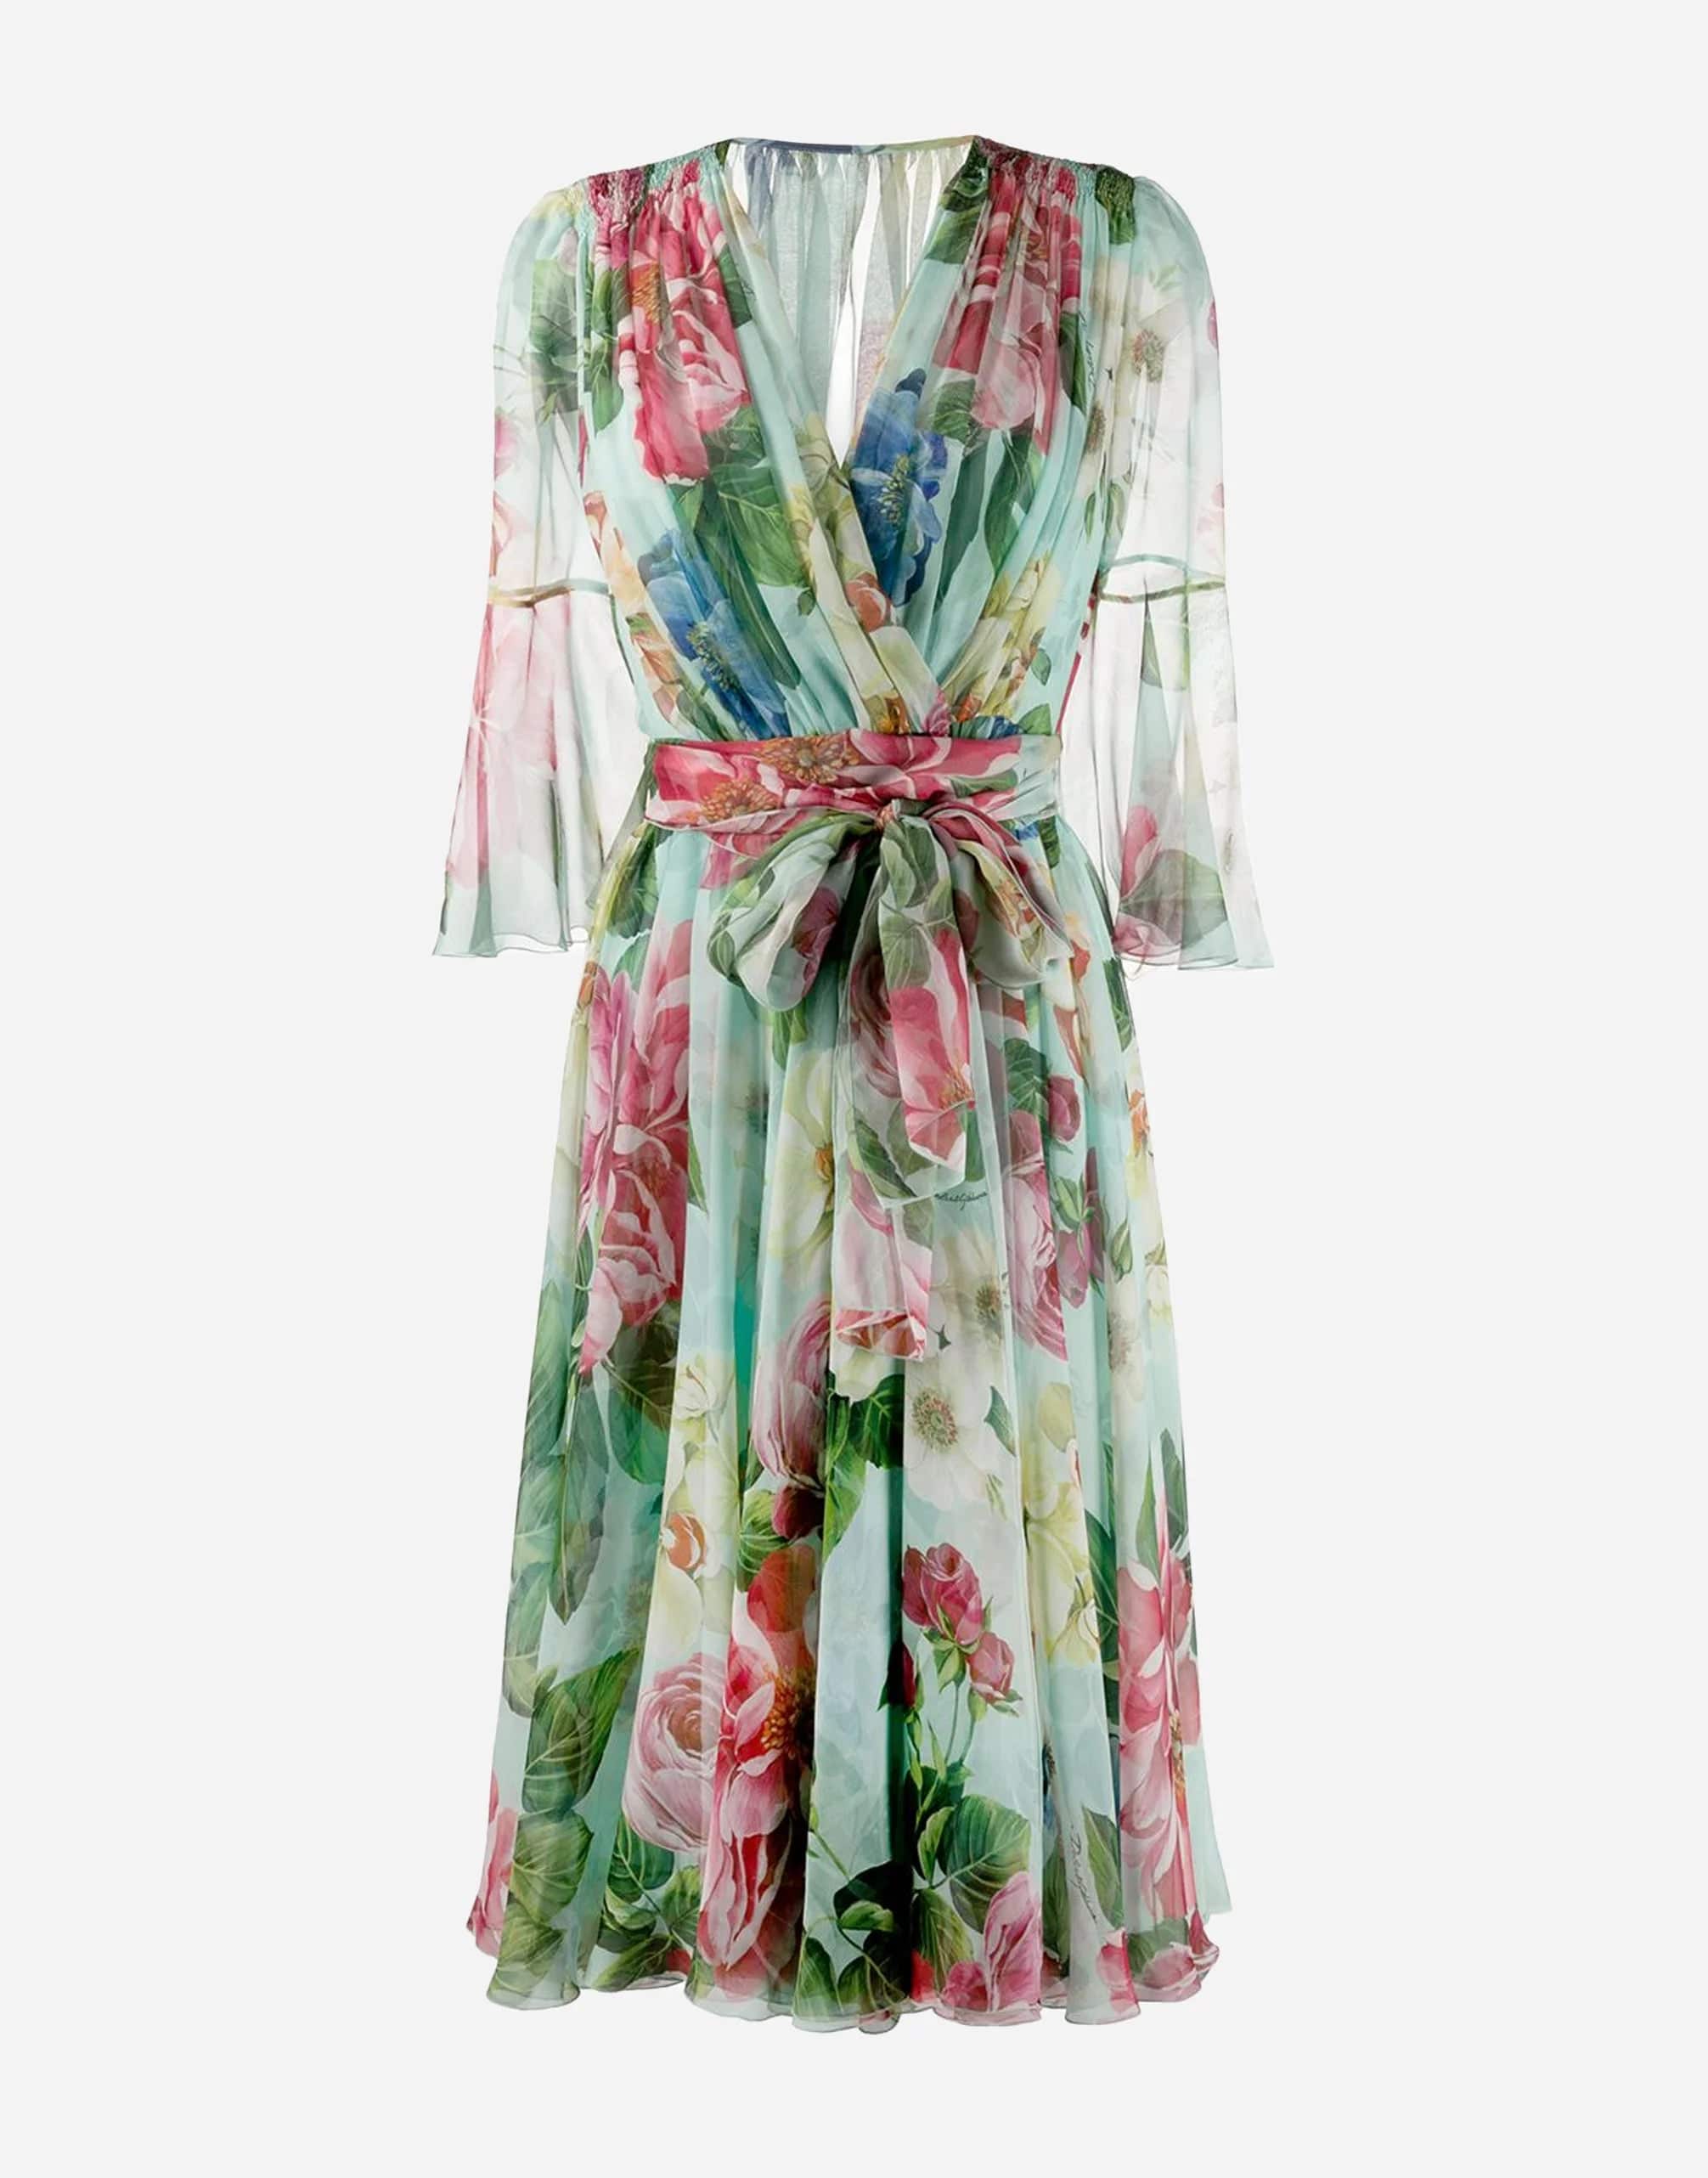 Dolce & Gabbana Floral Print Flaral Print Flared Dress2